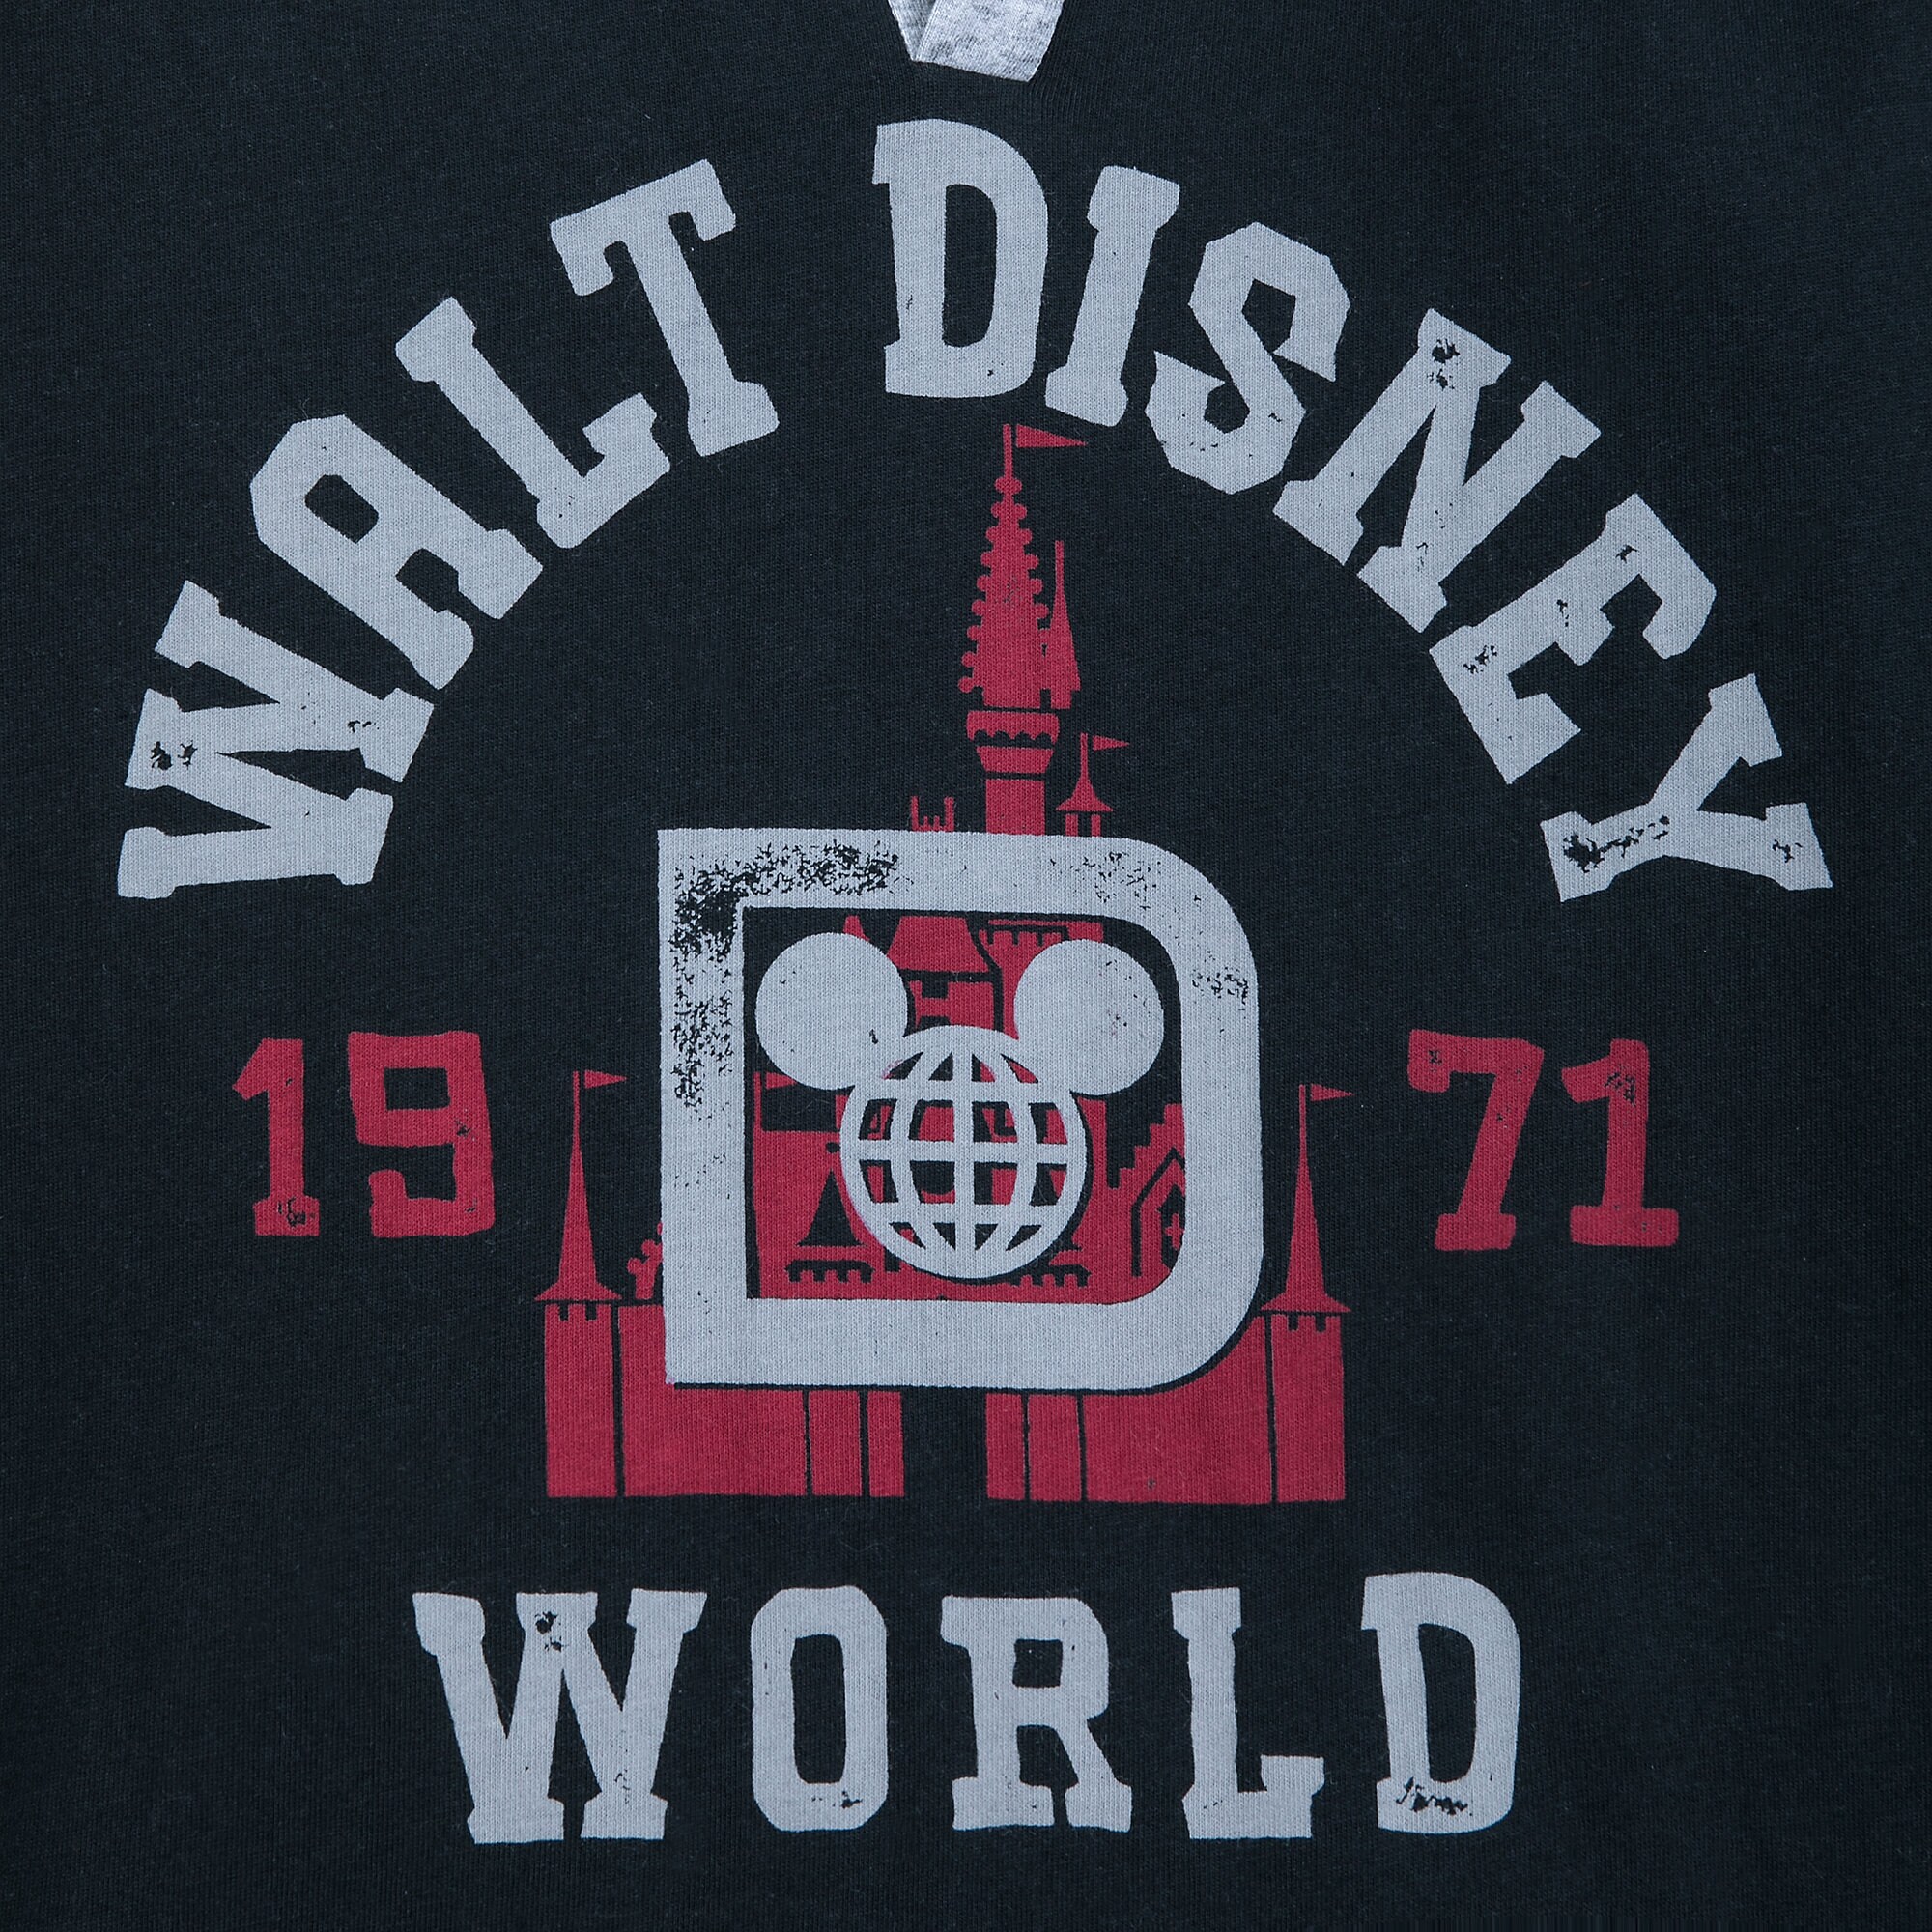 Walt Disney World Raglan T-Shirt for Men